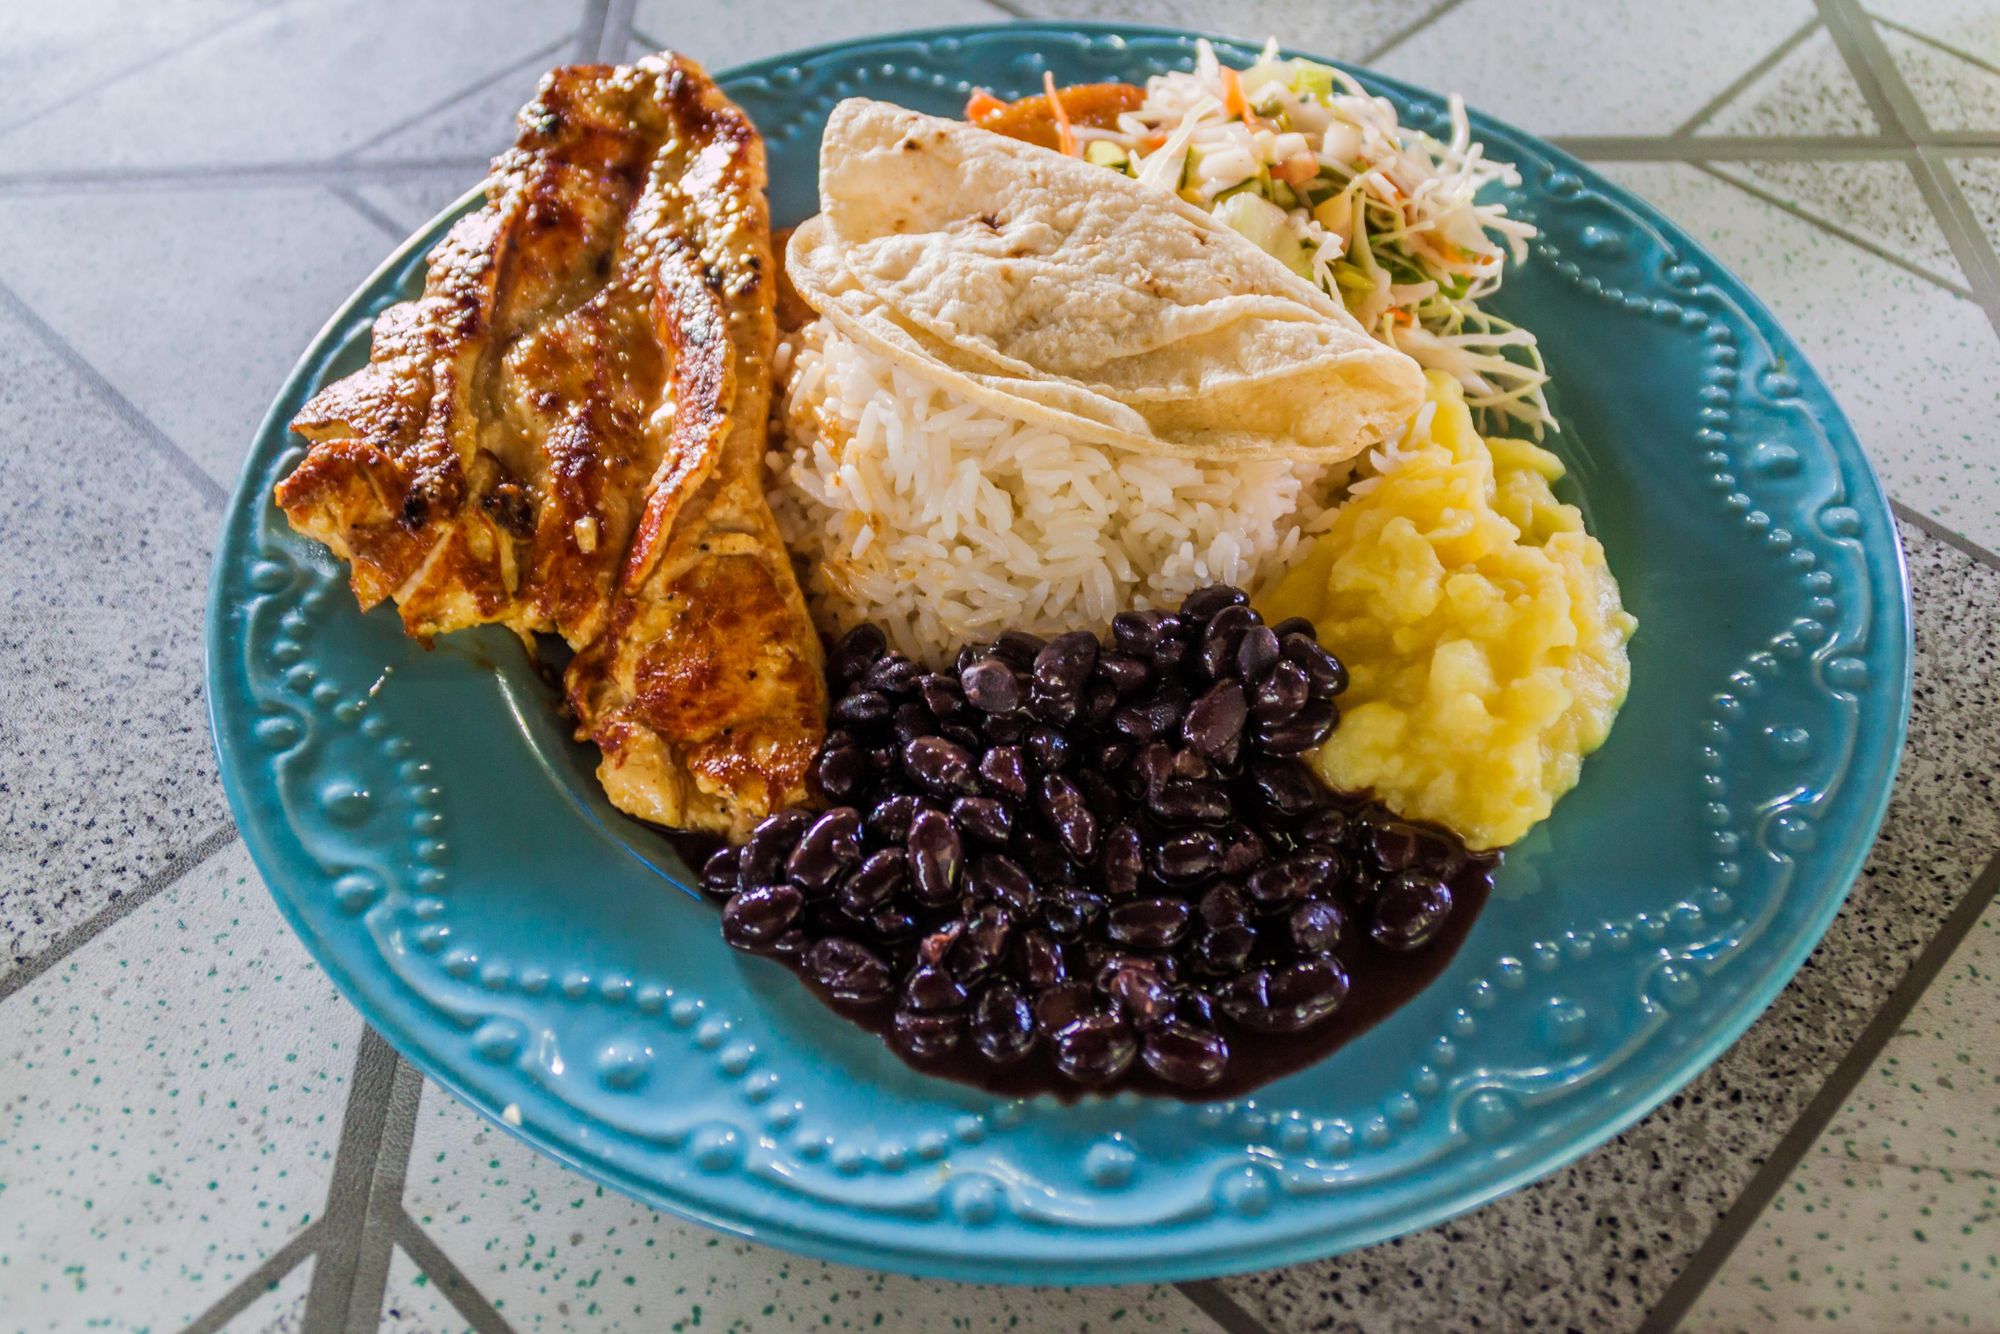 A mixed casado plate in Costa Rica. Photo: Getty